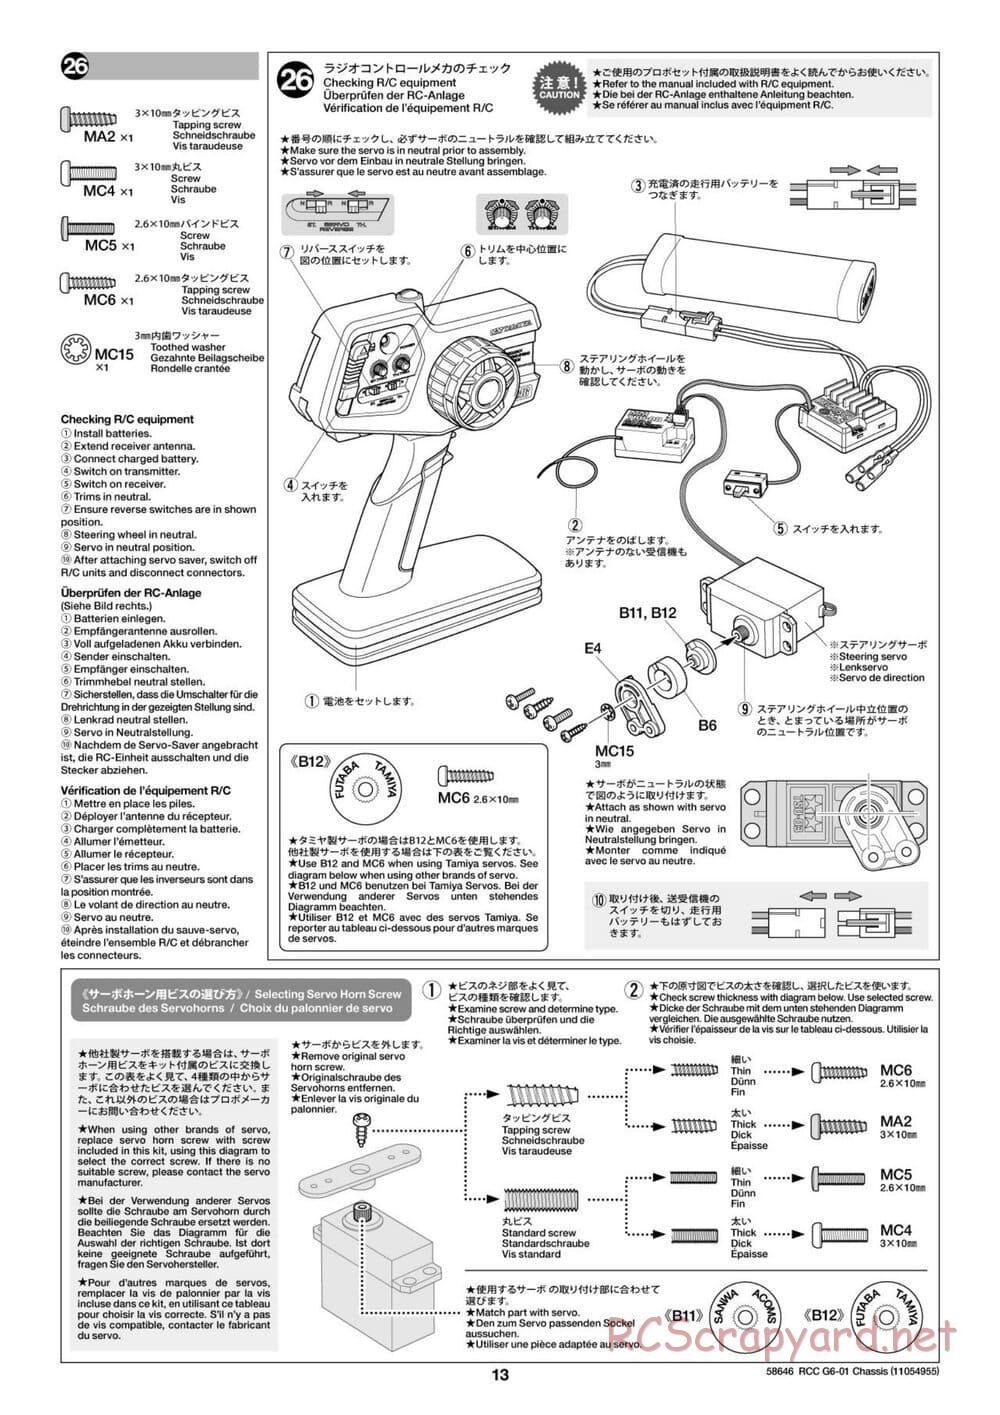 Tamiya - Konghead 6x6 - G6-01 Chassis - Manual - Page 13